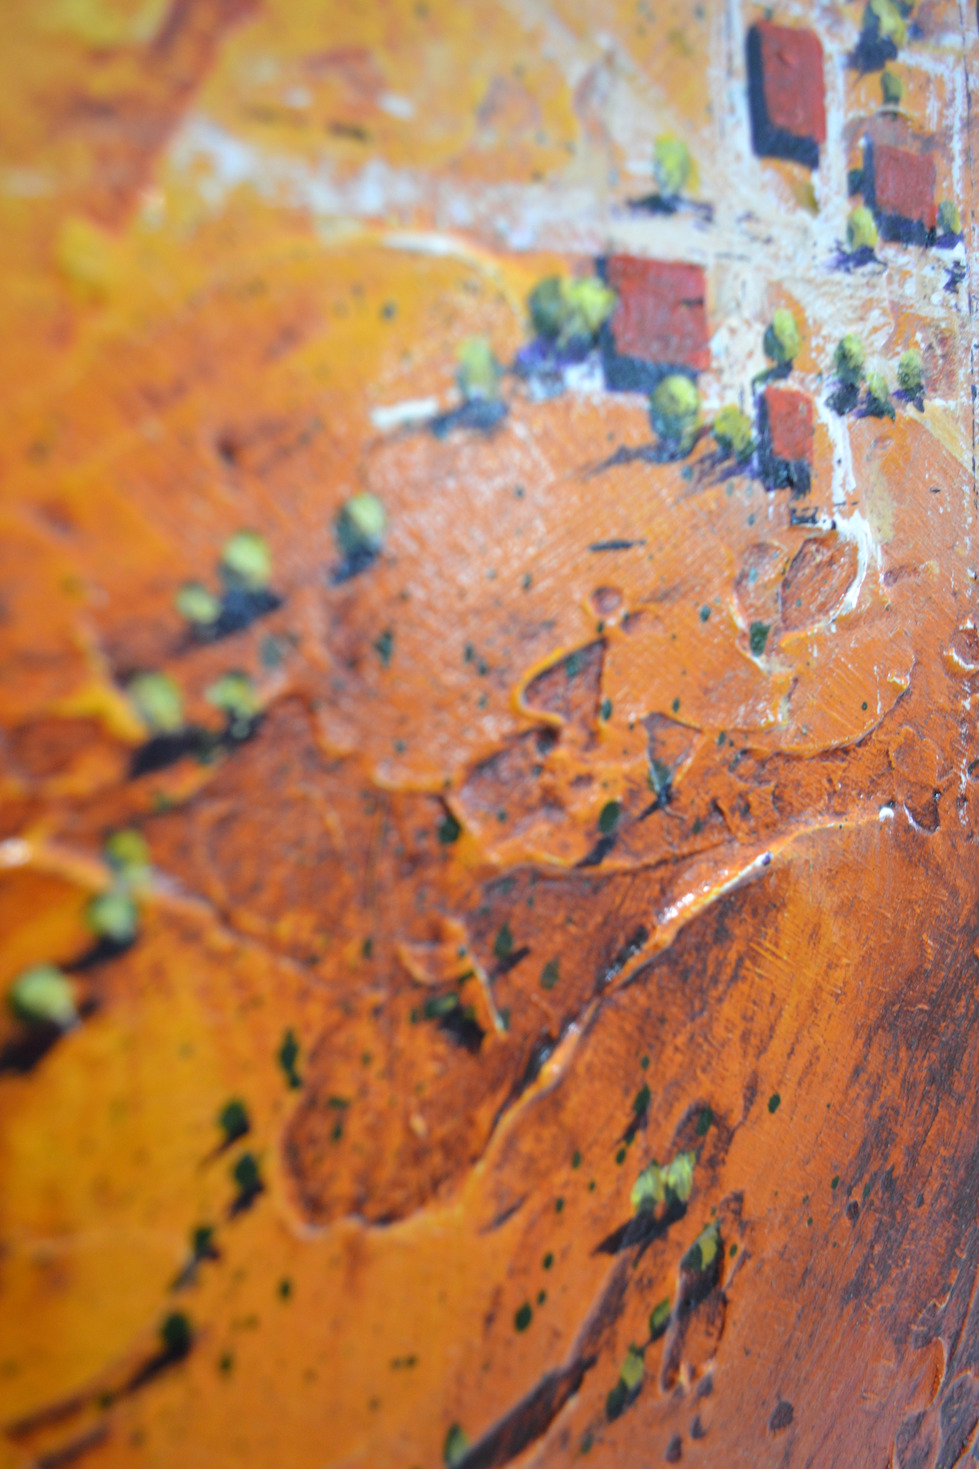 Close Up Detail Of Acrylic Painting "Kilcowera Station" By Louis Dalozzo